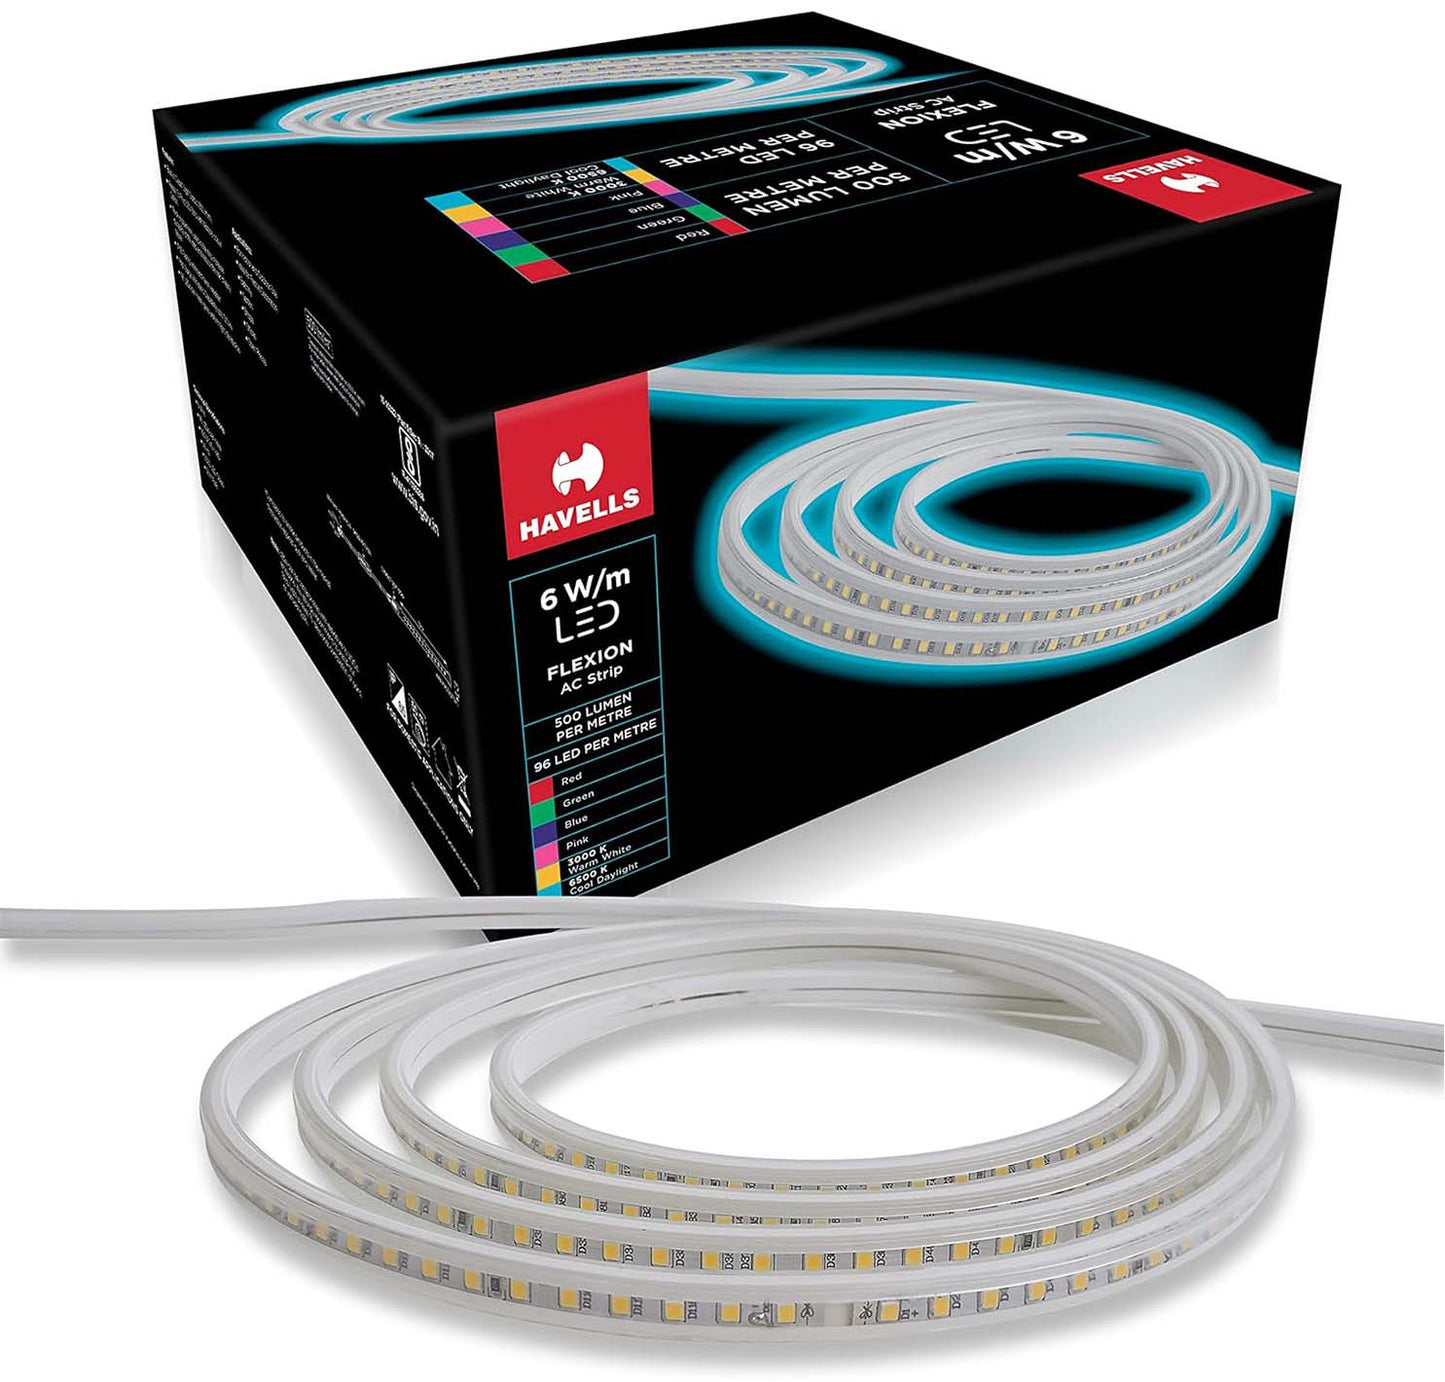 Havells LED Flexion AC Strip Light 6W Per Meter - 50 Meters